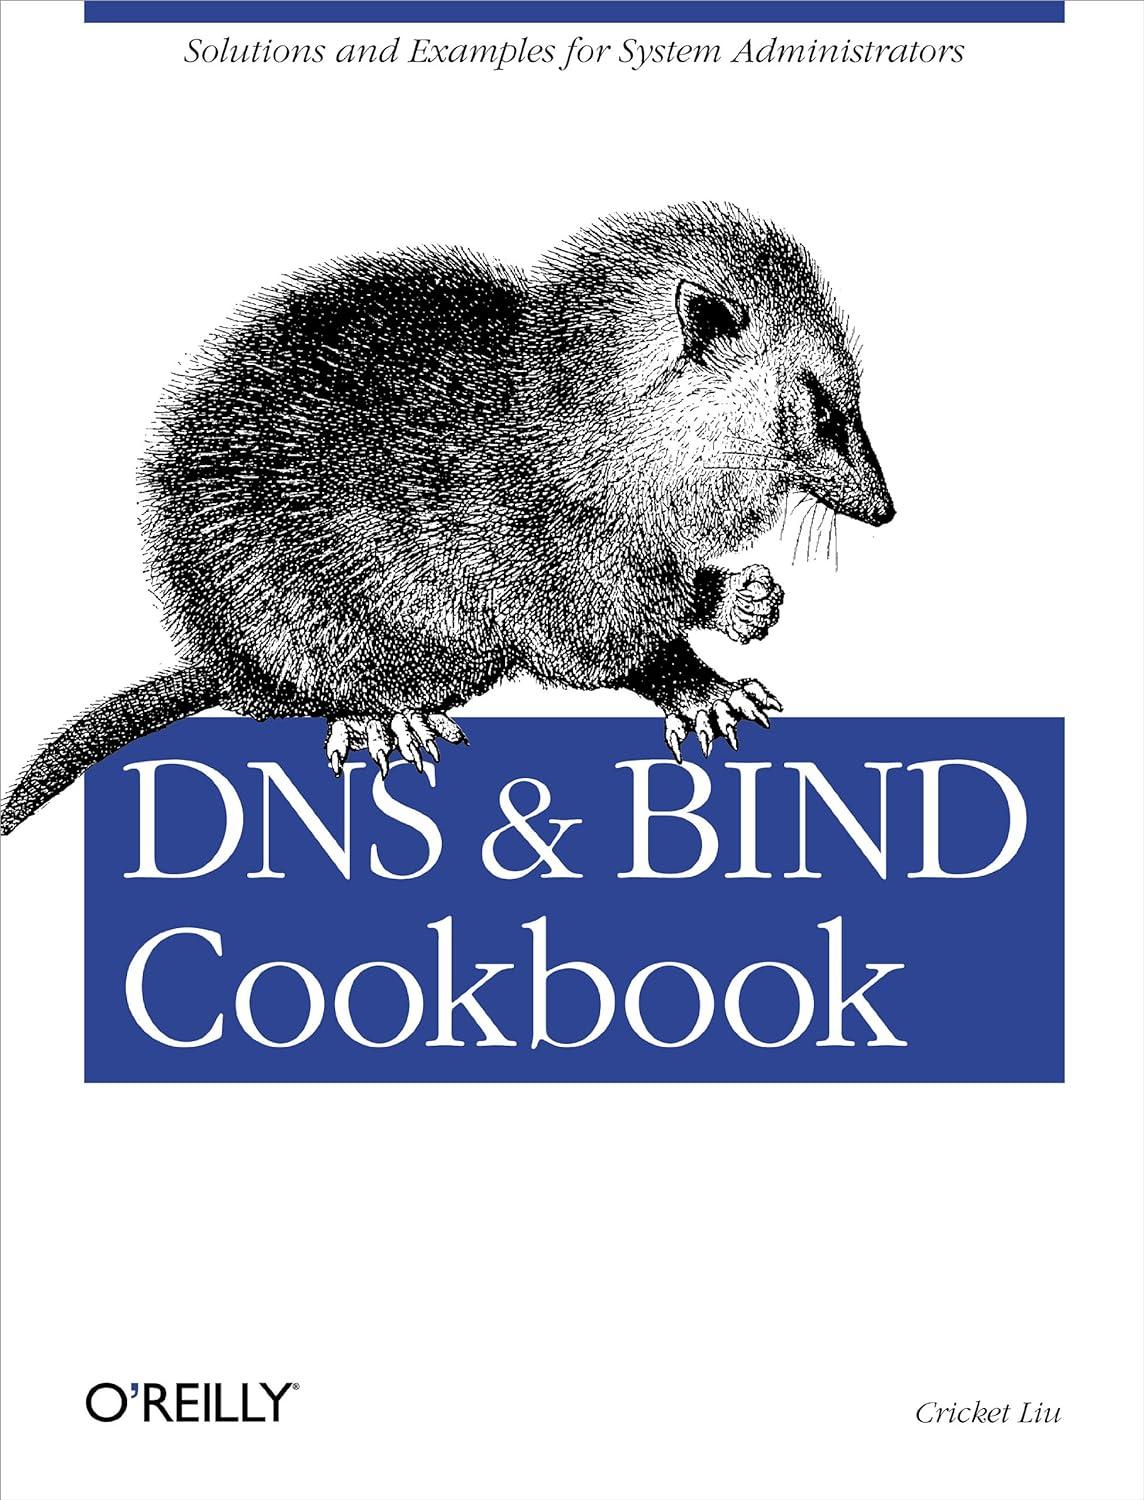 dns & bind cookbook 1st edition cricket liu 0596004109, 978-0596004101